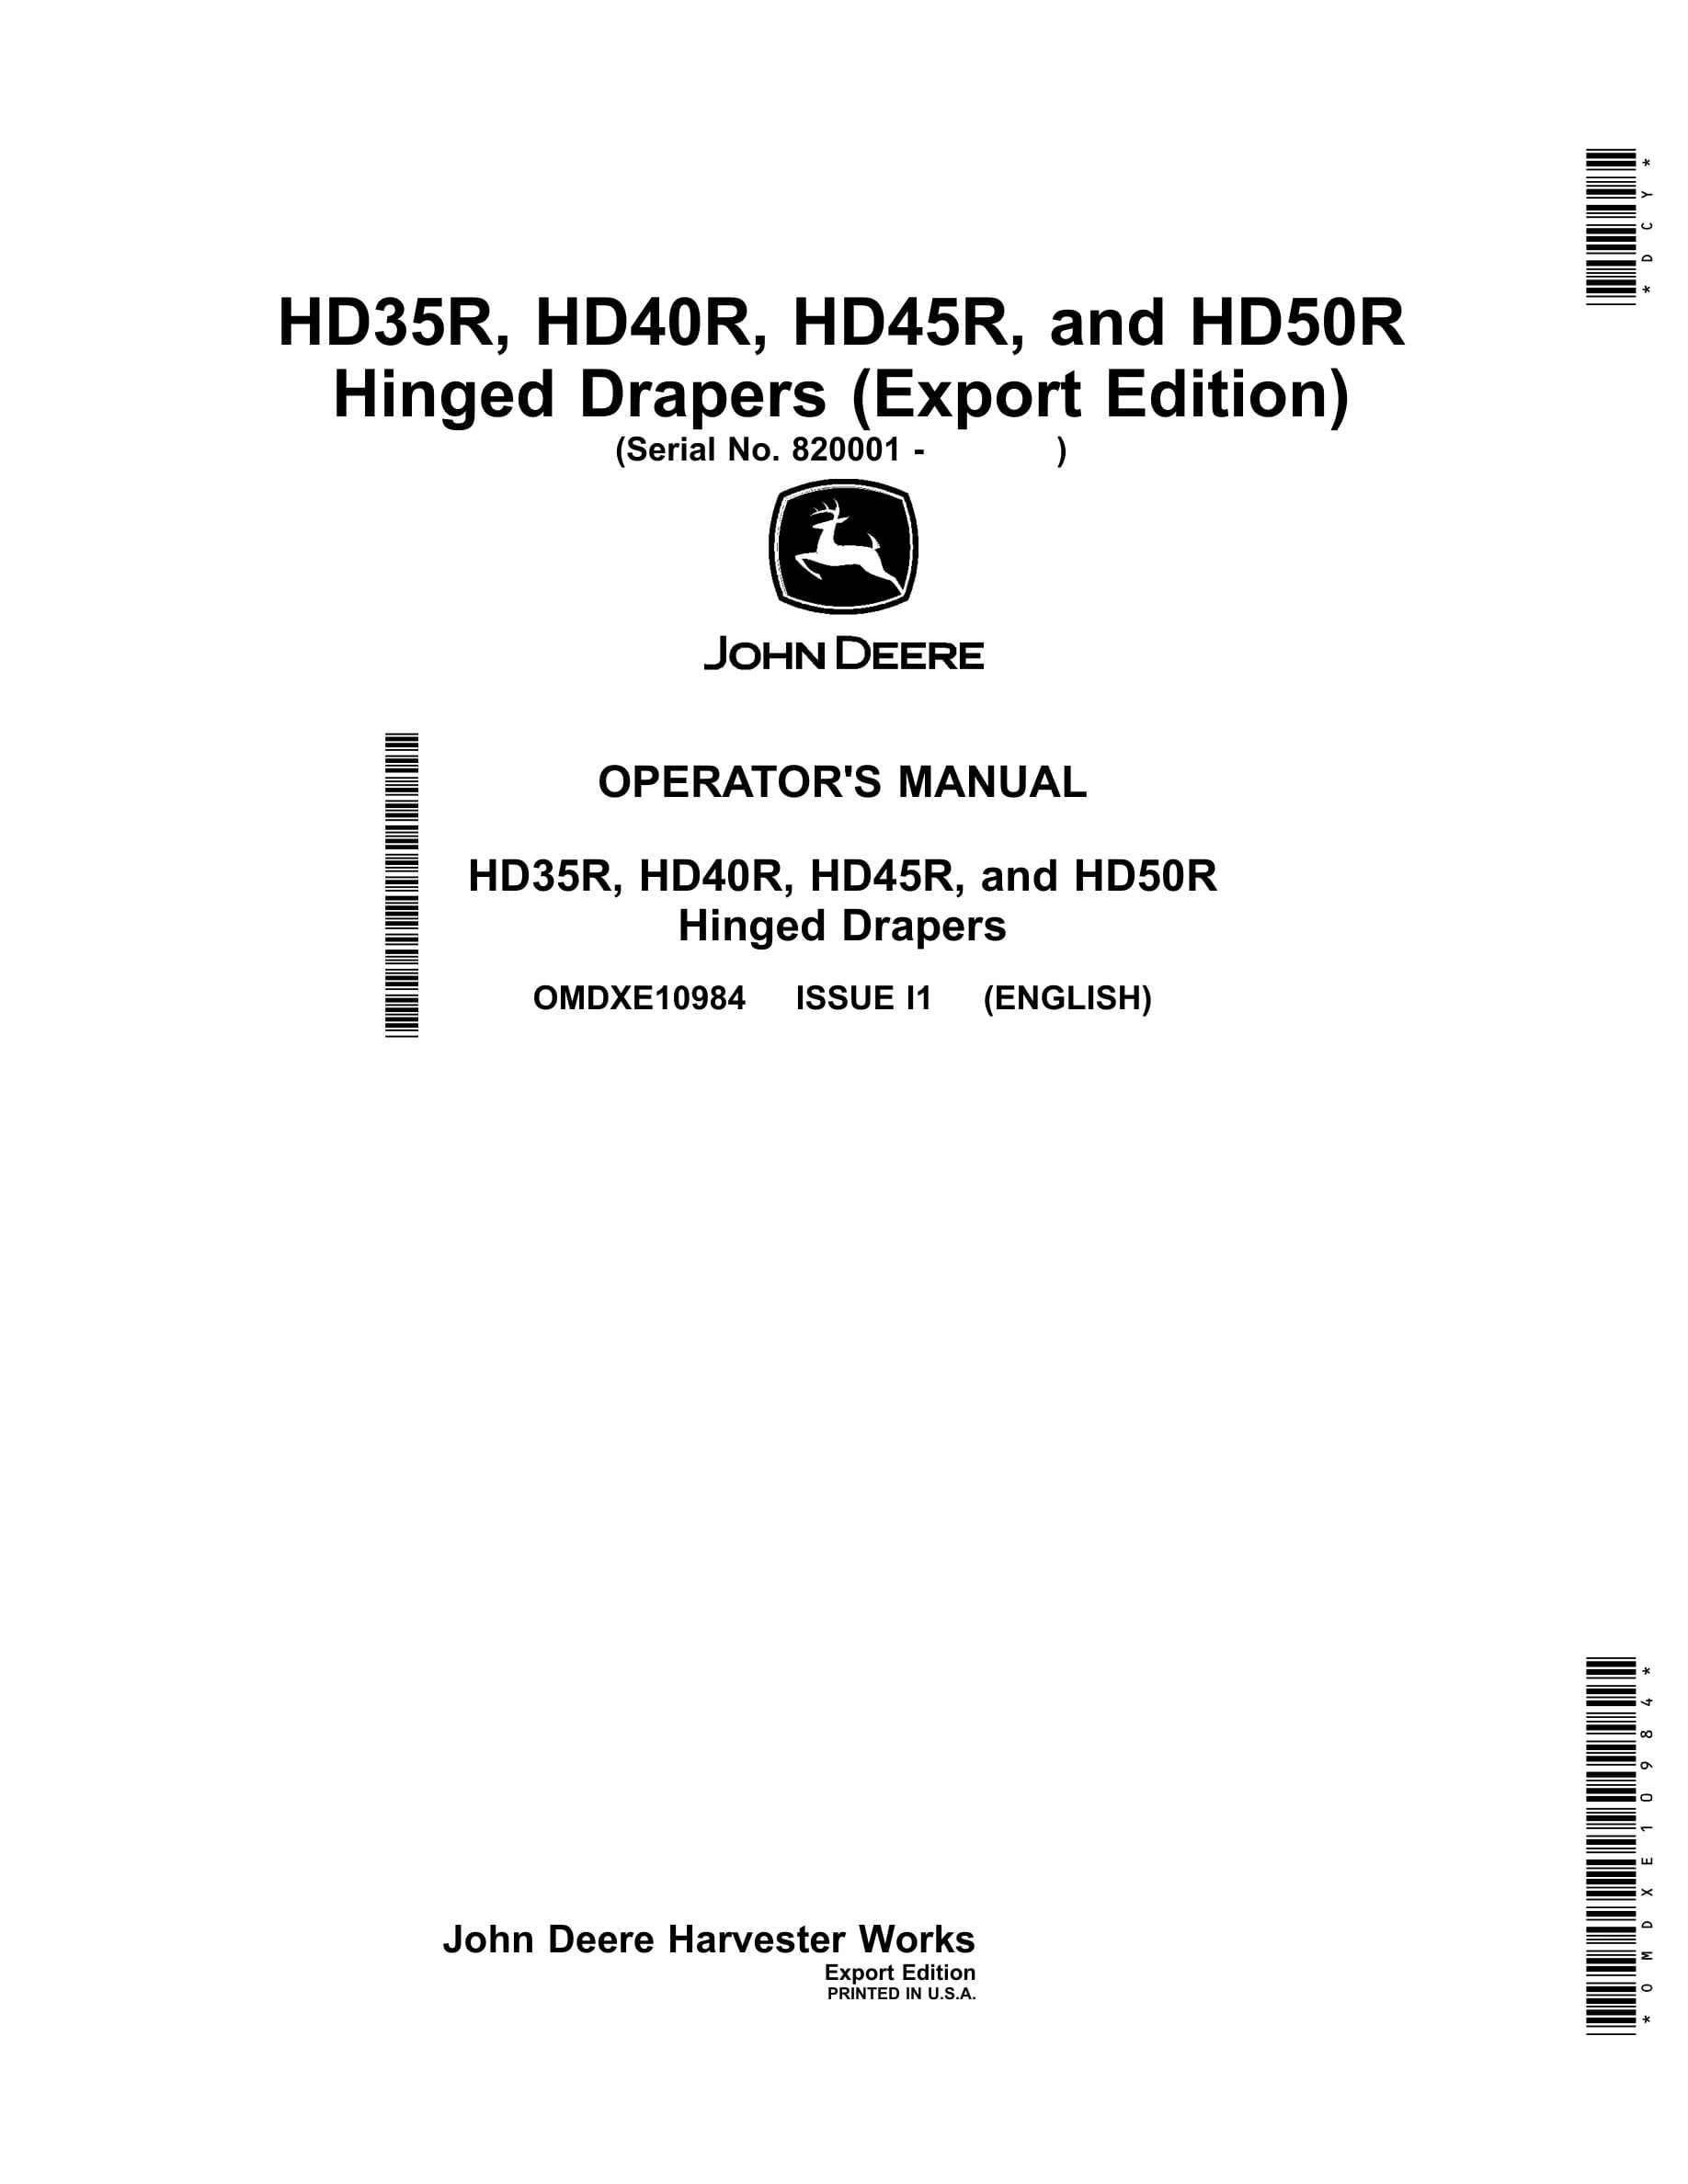 John Deere HD35R, HD40R, HD45R, and HD50R Hinged Drapers Operator Manual OMDXE10984-1